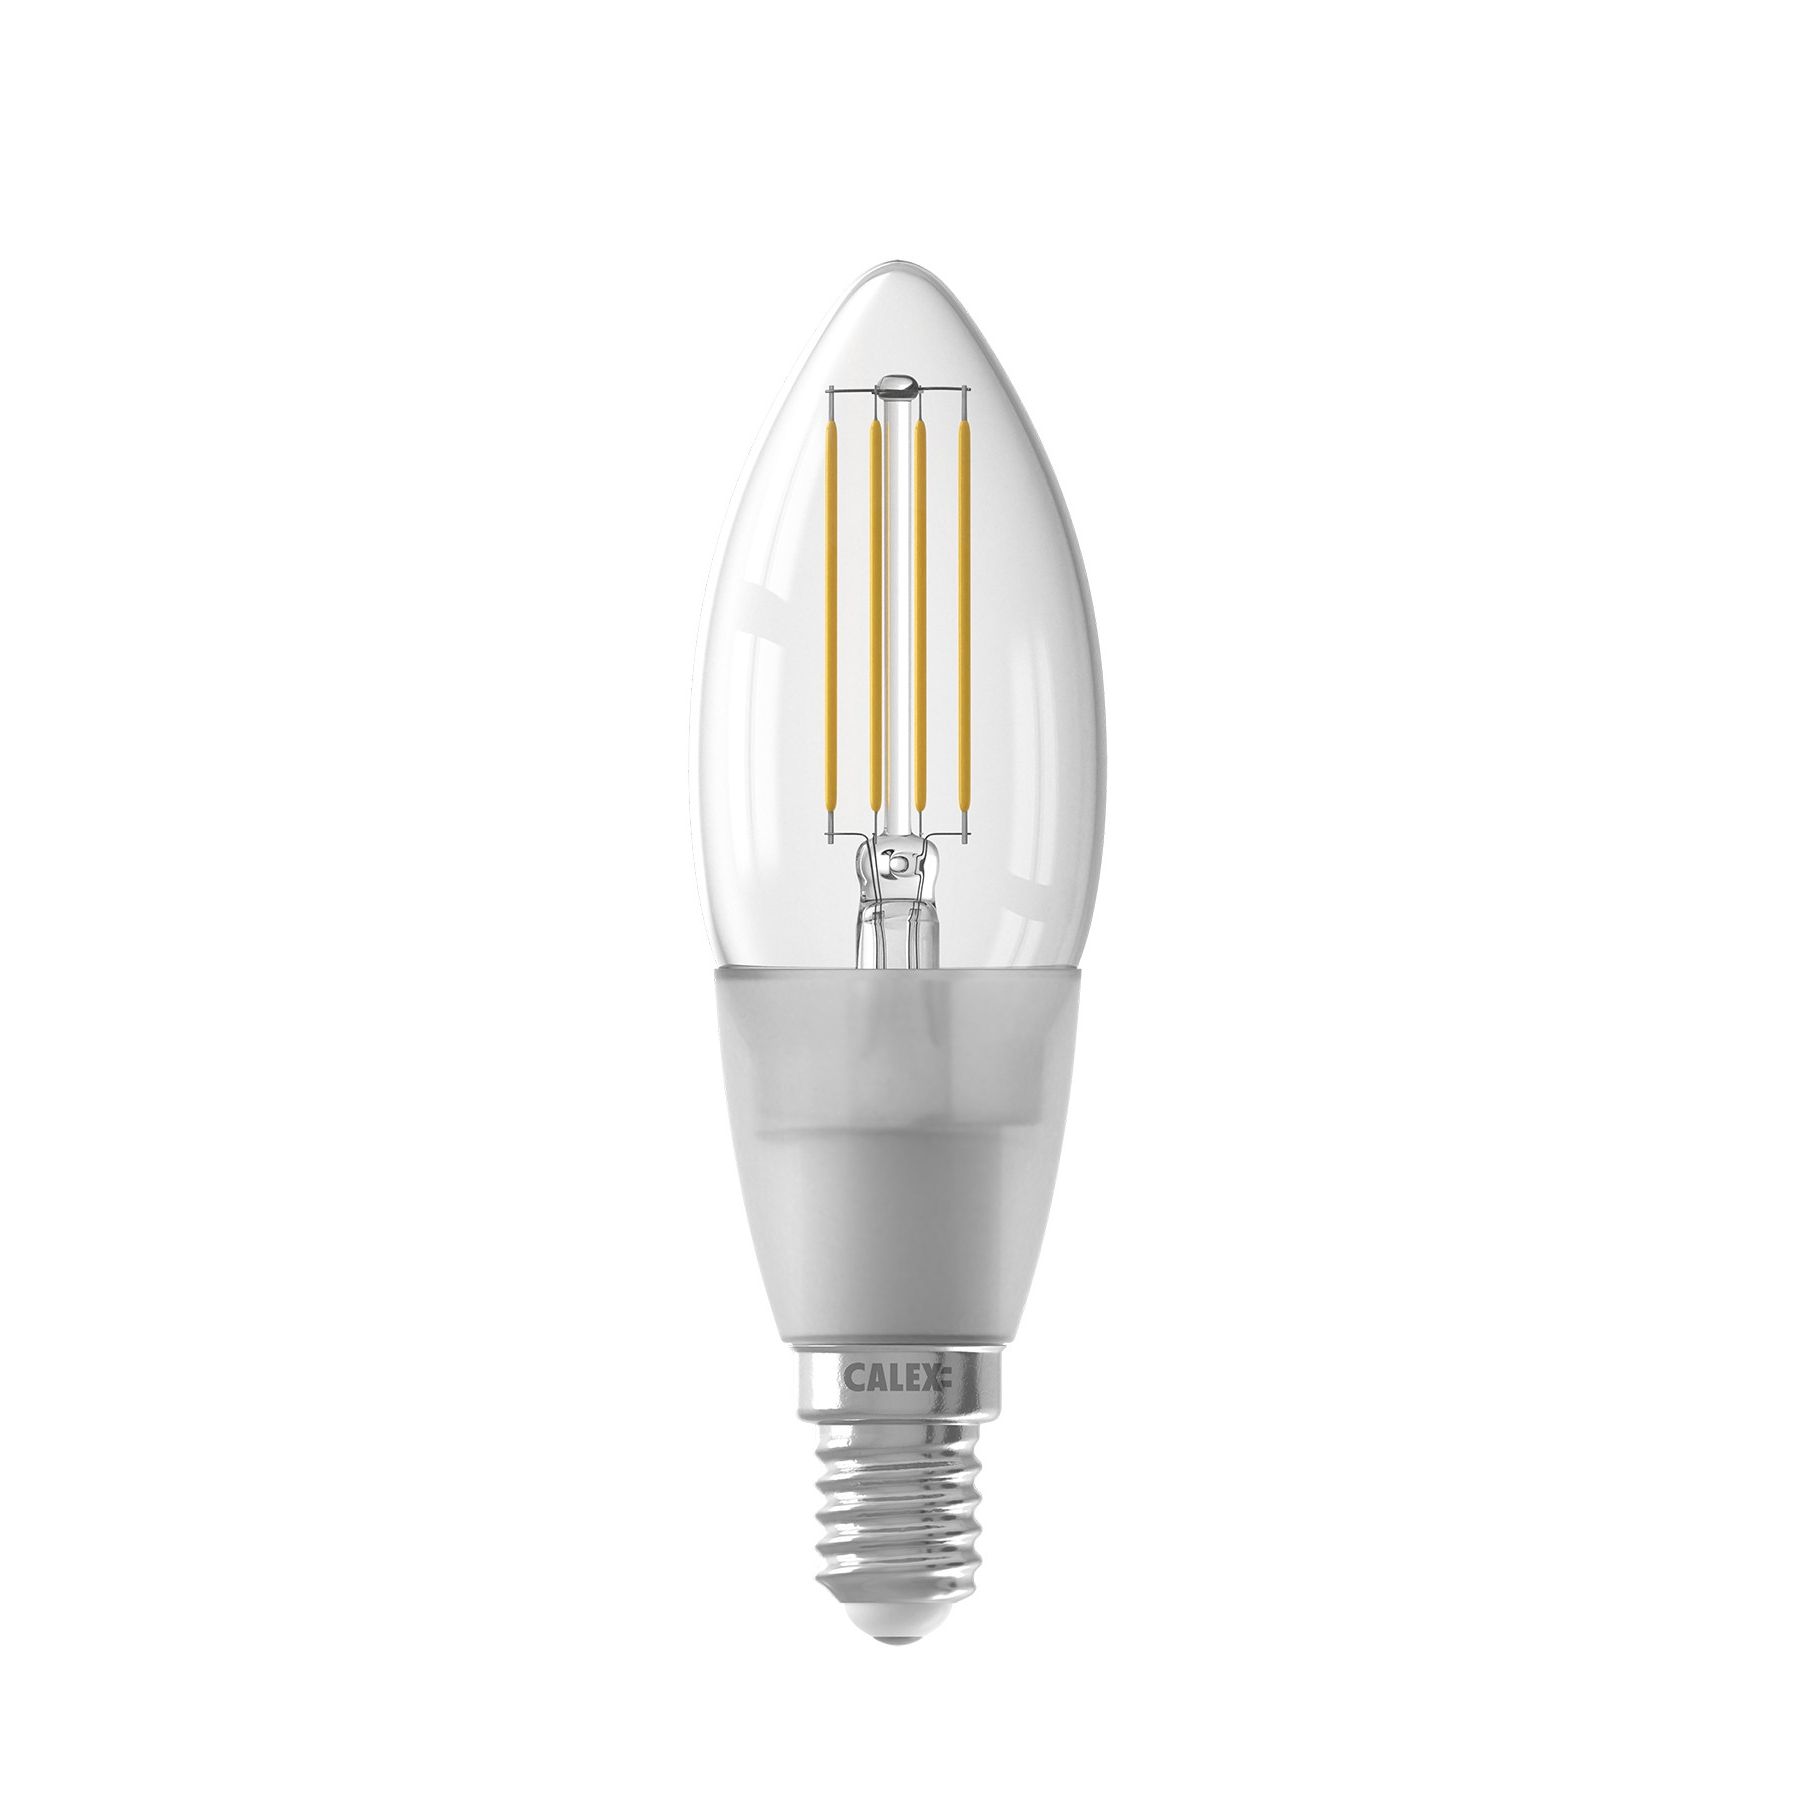 Calex Smart LED lamp - Ø 3,5 x cm - E14 - 4,5W - dimfunctie via app - 1800 3000K - white ambiance | Lichtkoning